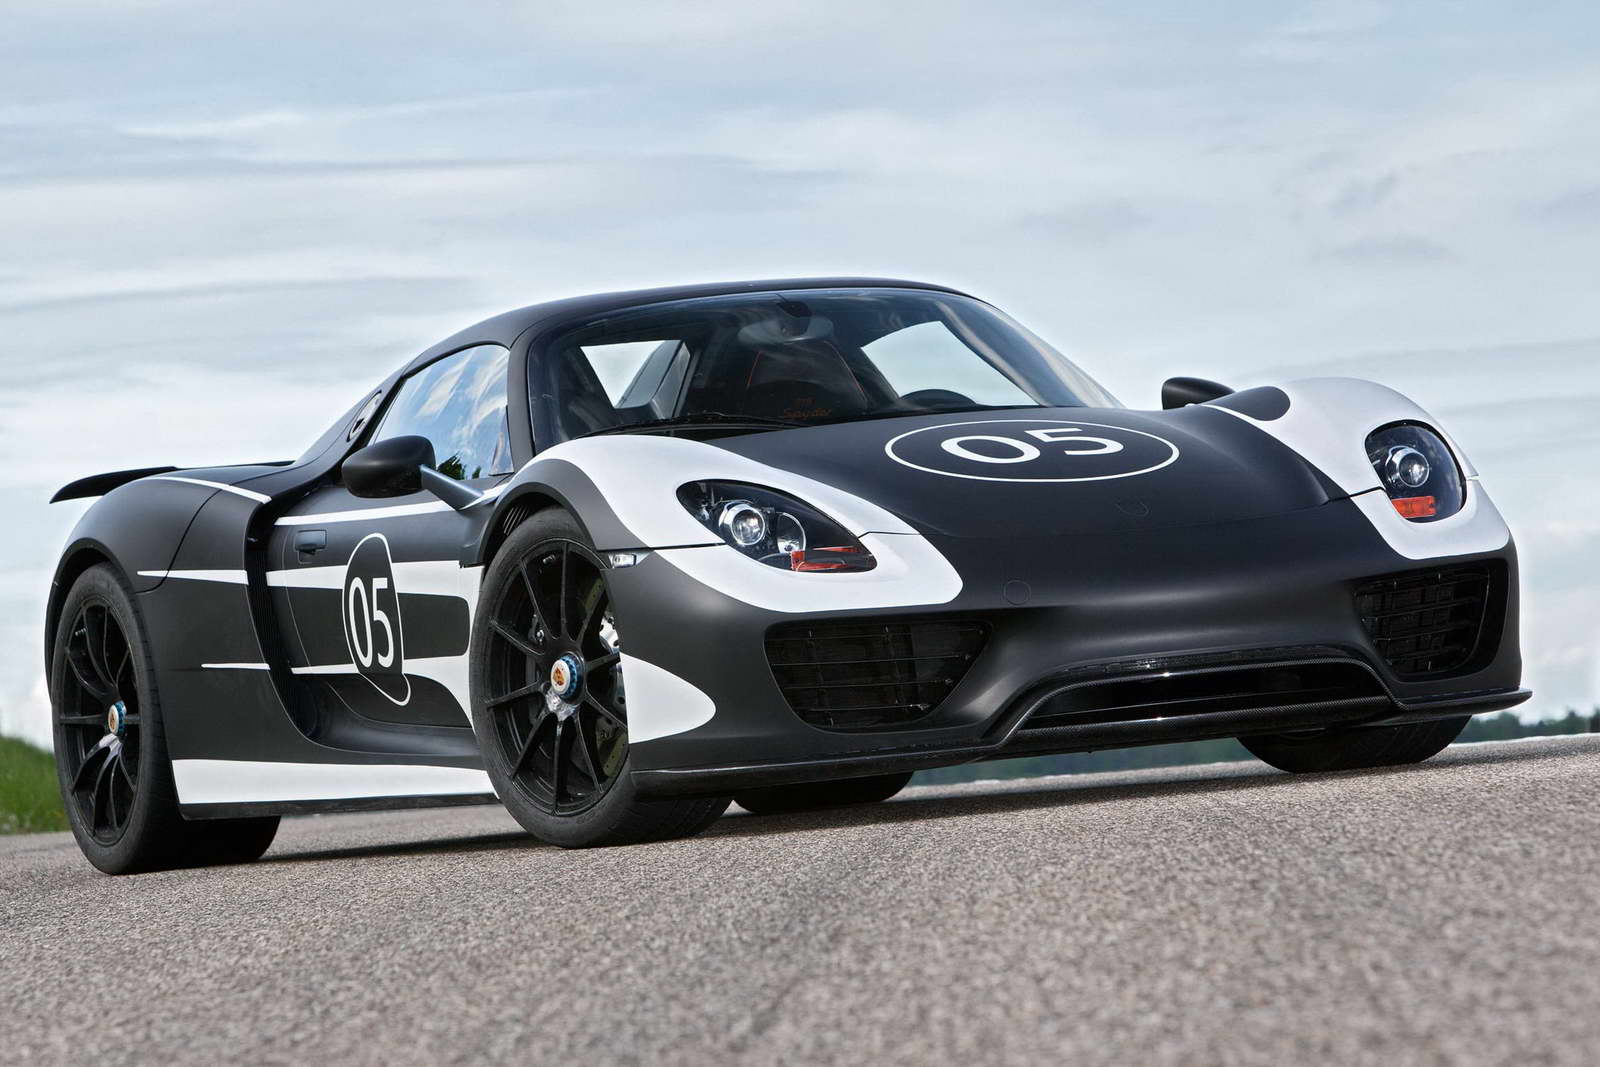 Ontario taxpayers subsidized buyers of $1.1 million Porsche 918